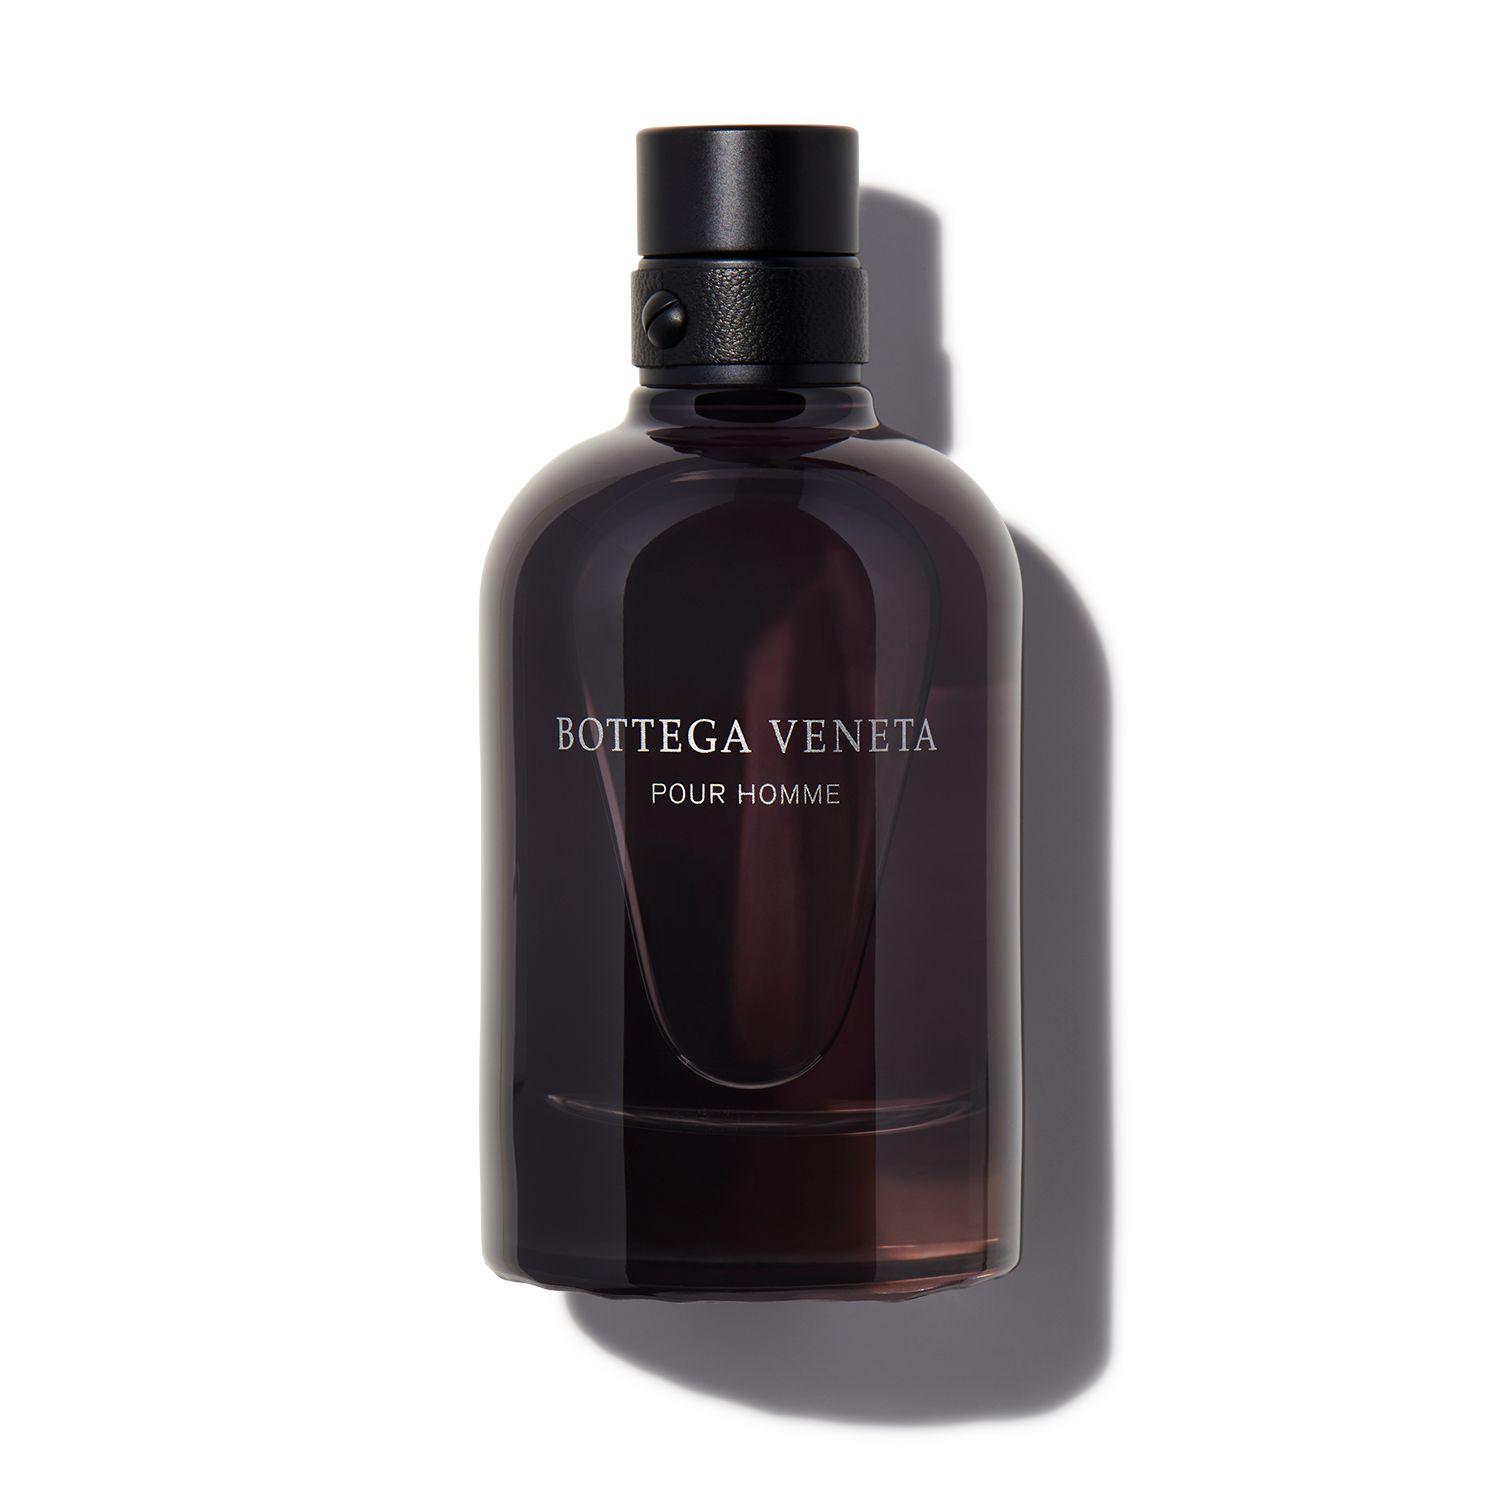 Pour for per $16.95 Bottega Homme Veneta Scentbird Veneta Bottega month |